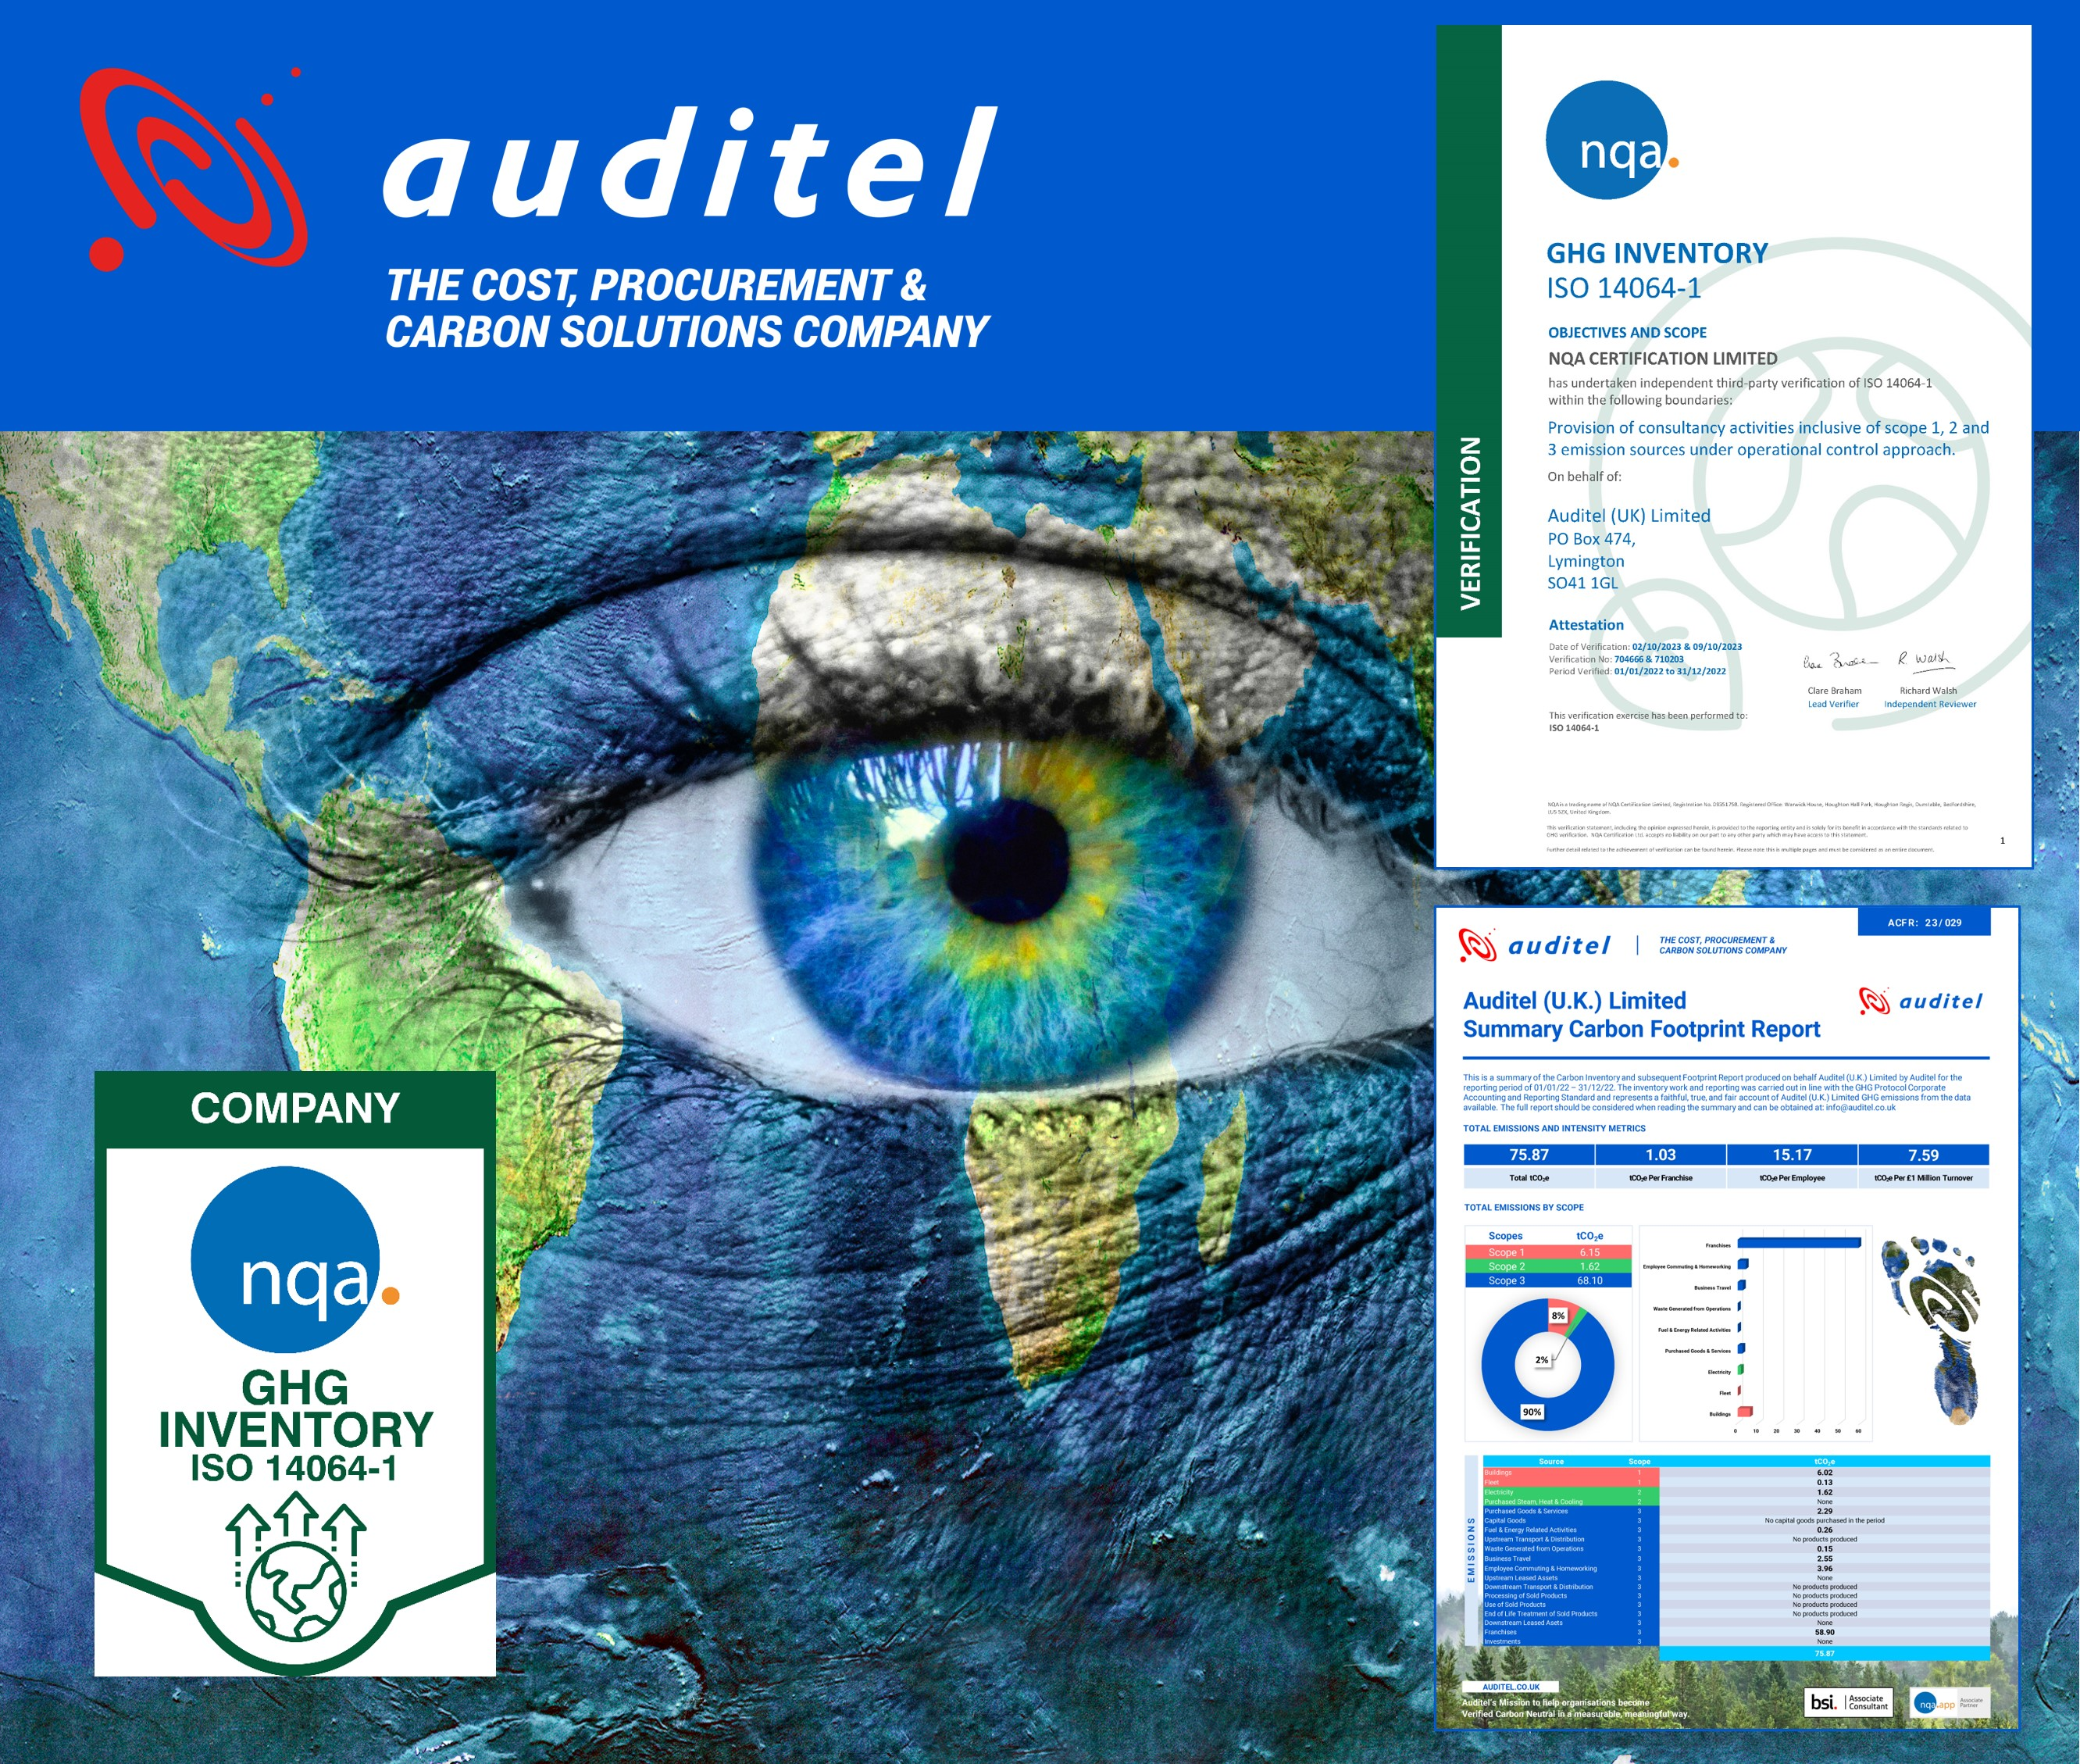 Auditel achieve ISO 14064-1 verification